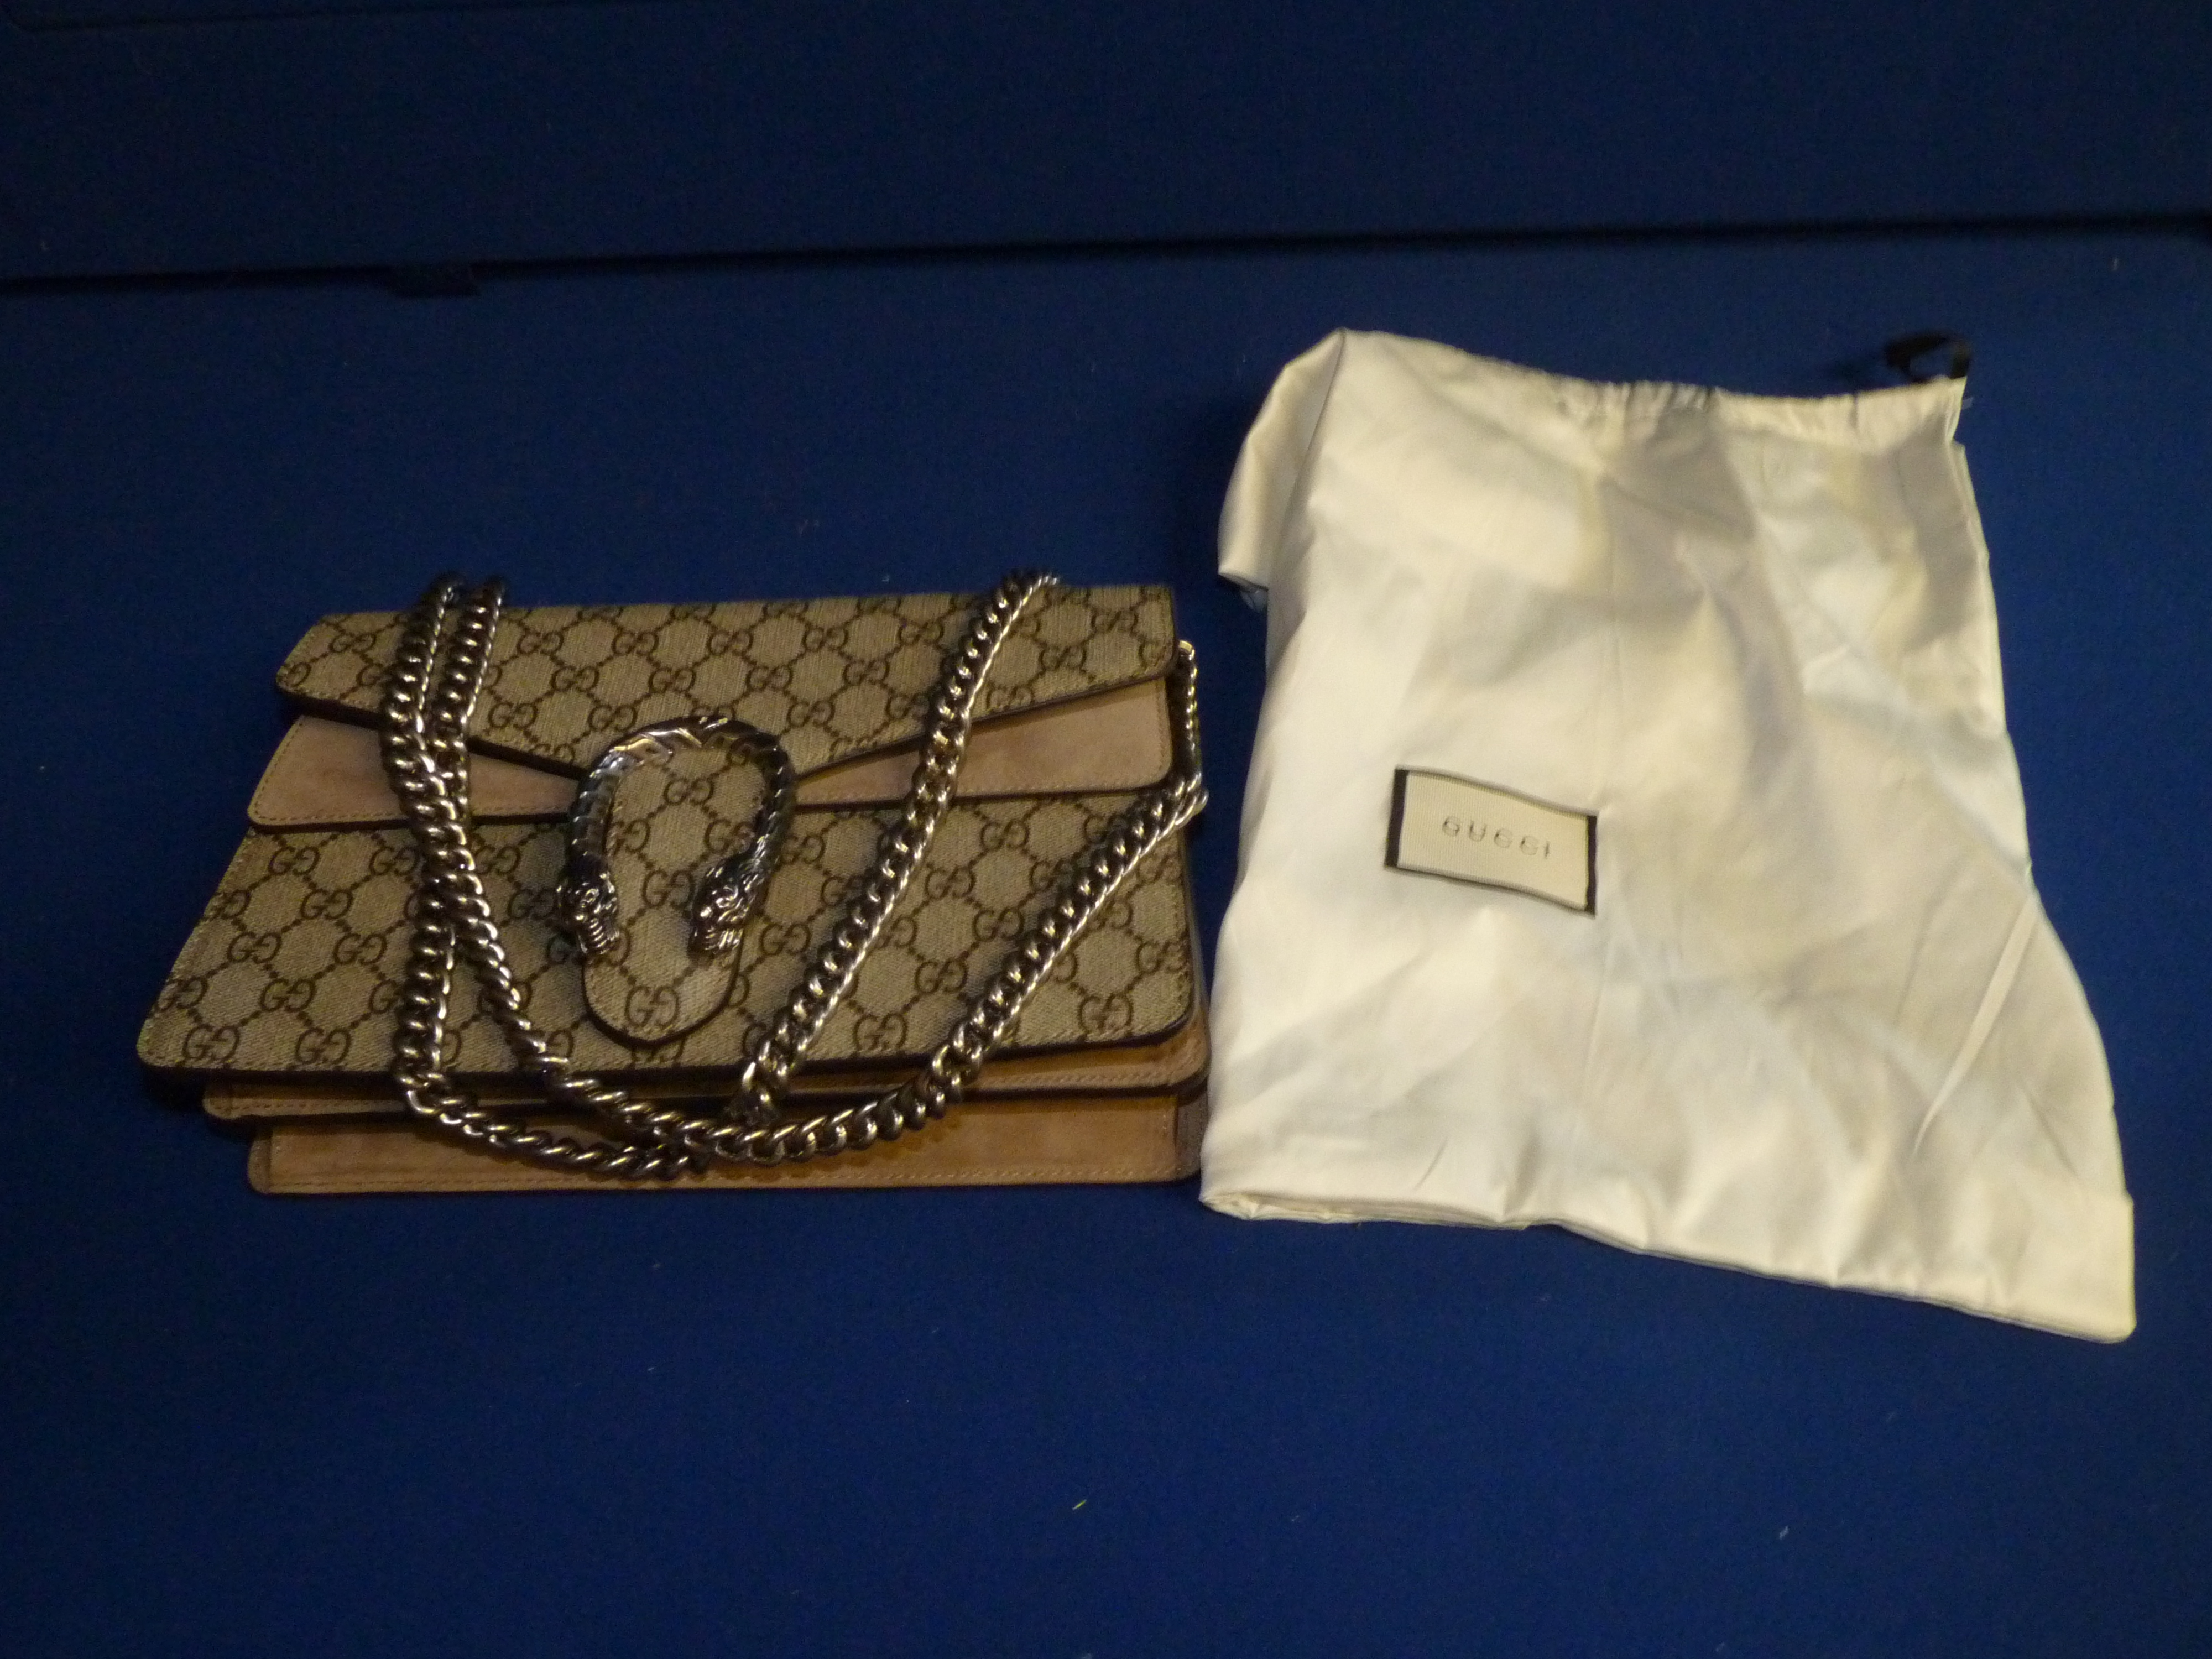 Gucci suede inner handbag - Image 6 of 6